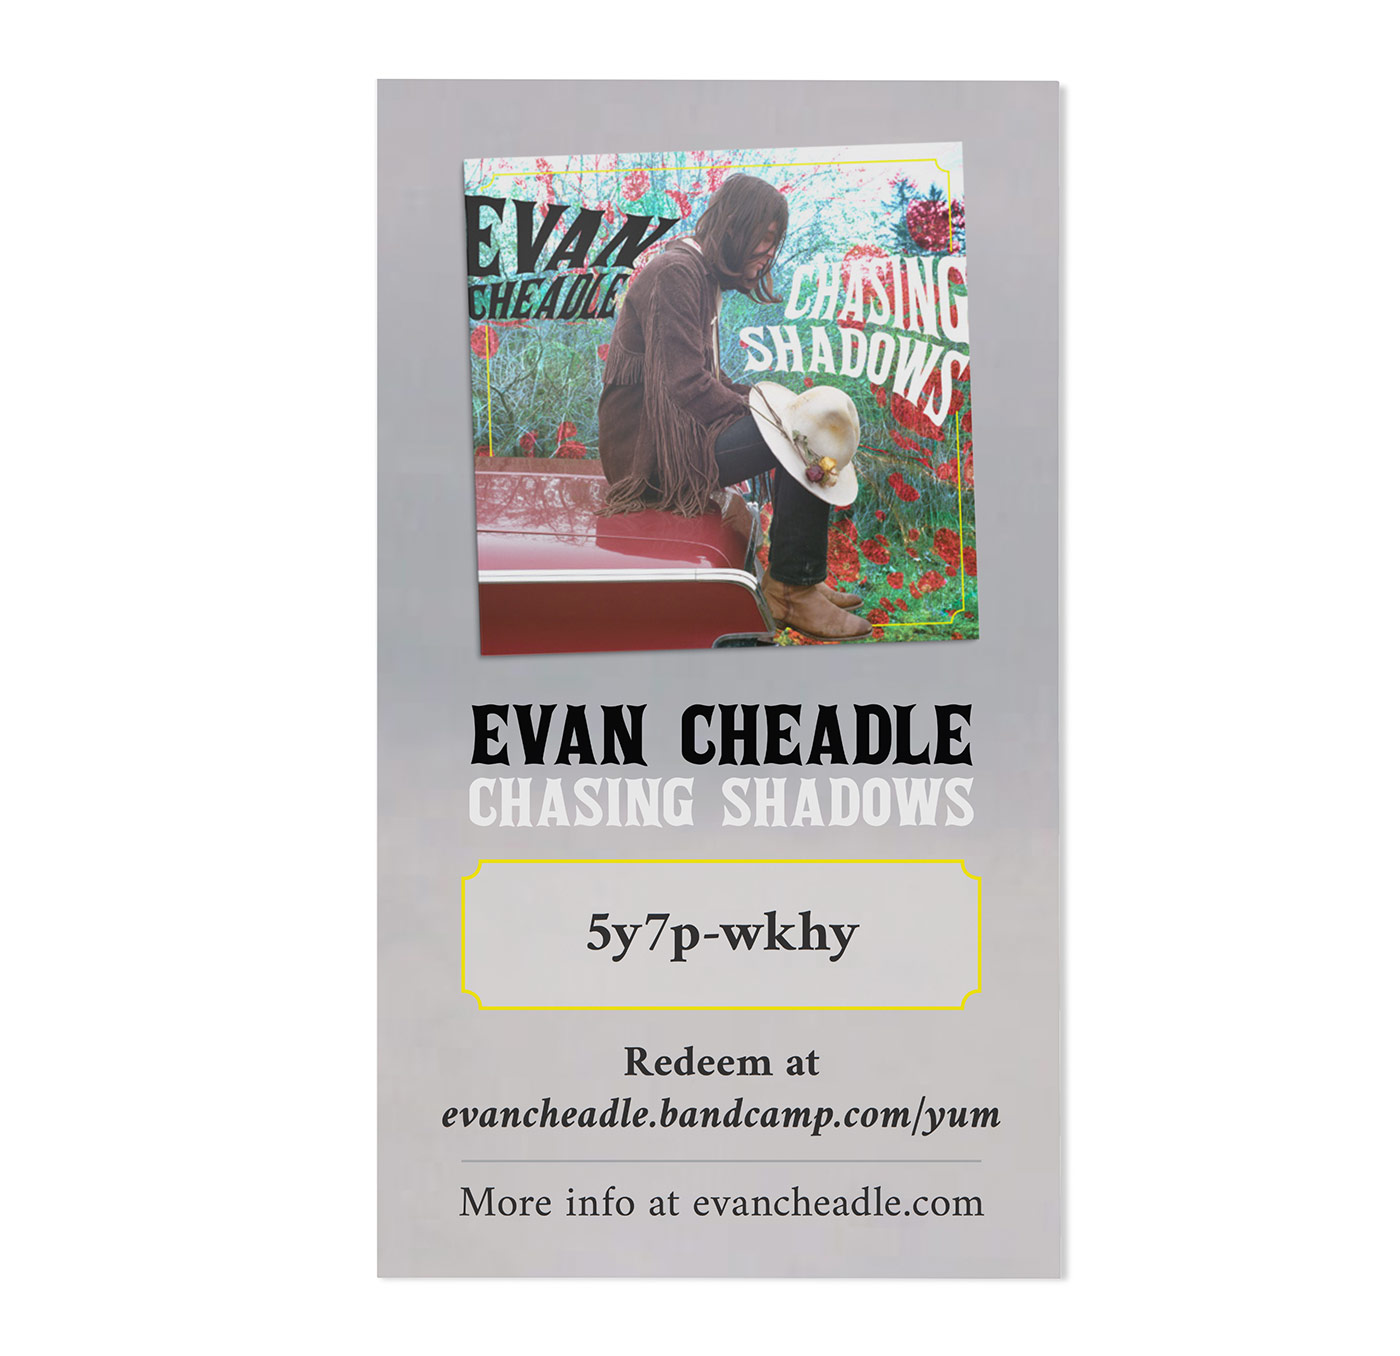 Evan Cheadle download card design.